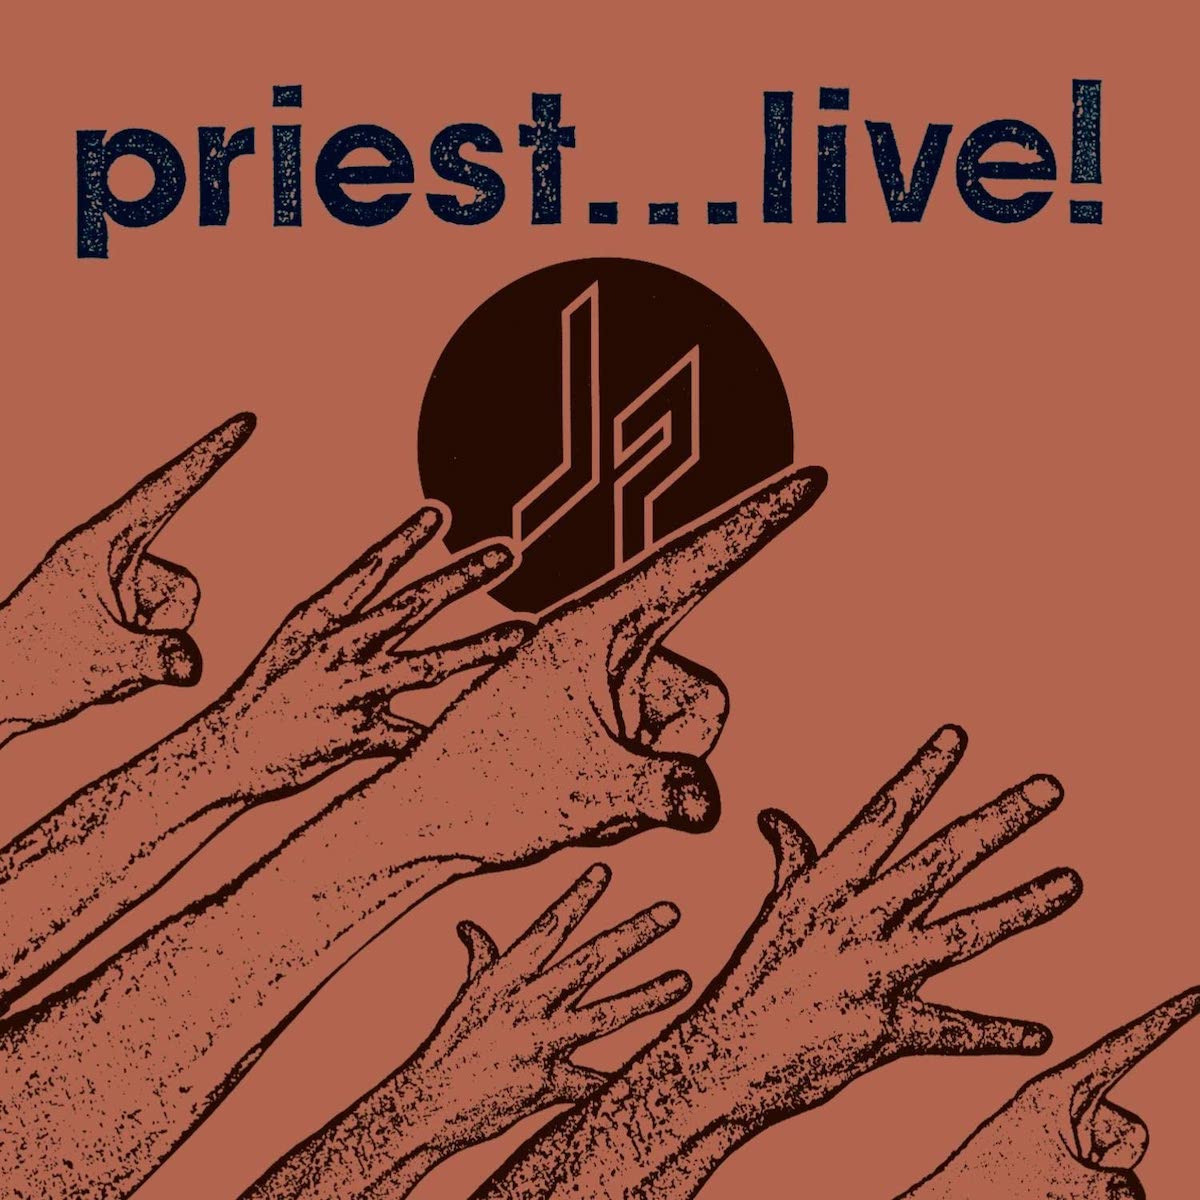 Classic Album Review: Judas Priest  Priest … Live!: The Remasters -  Tinnitist